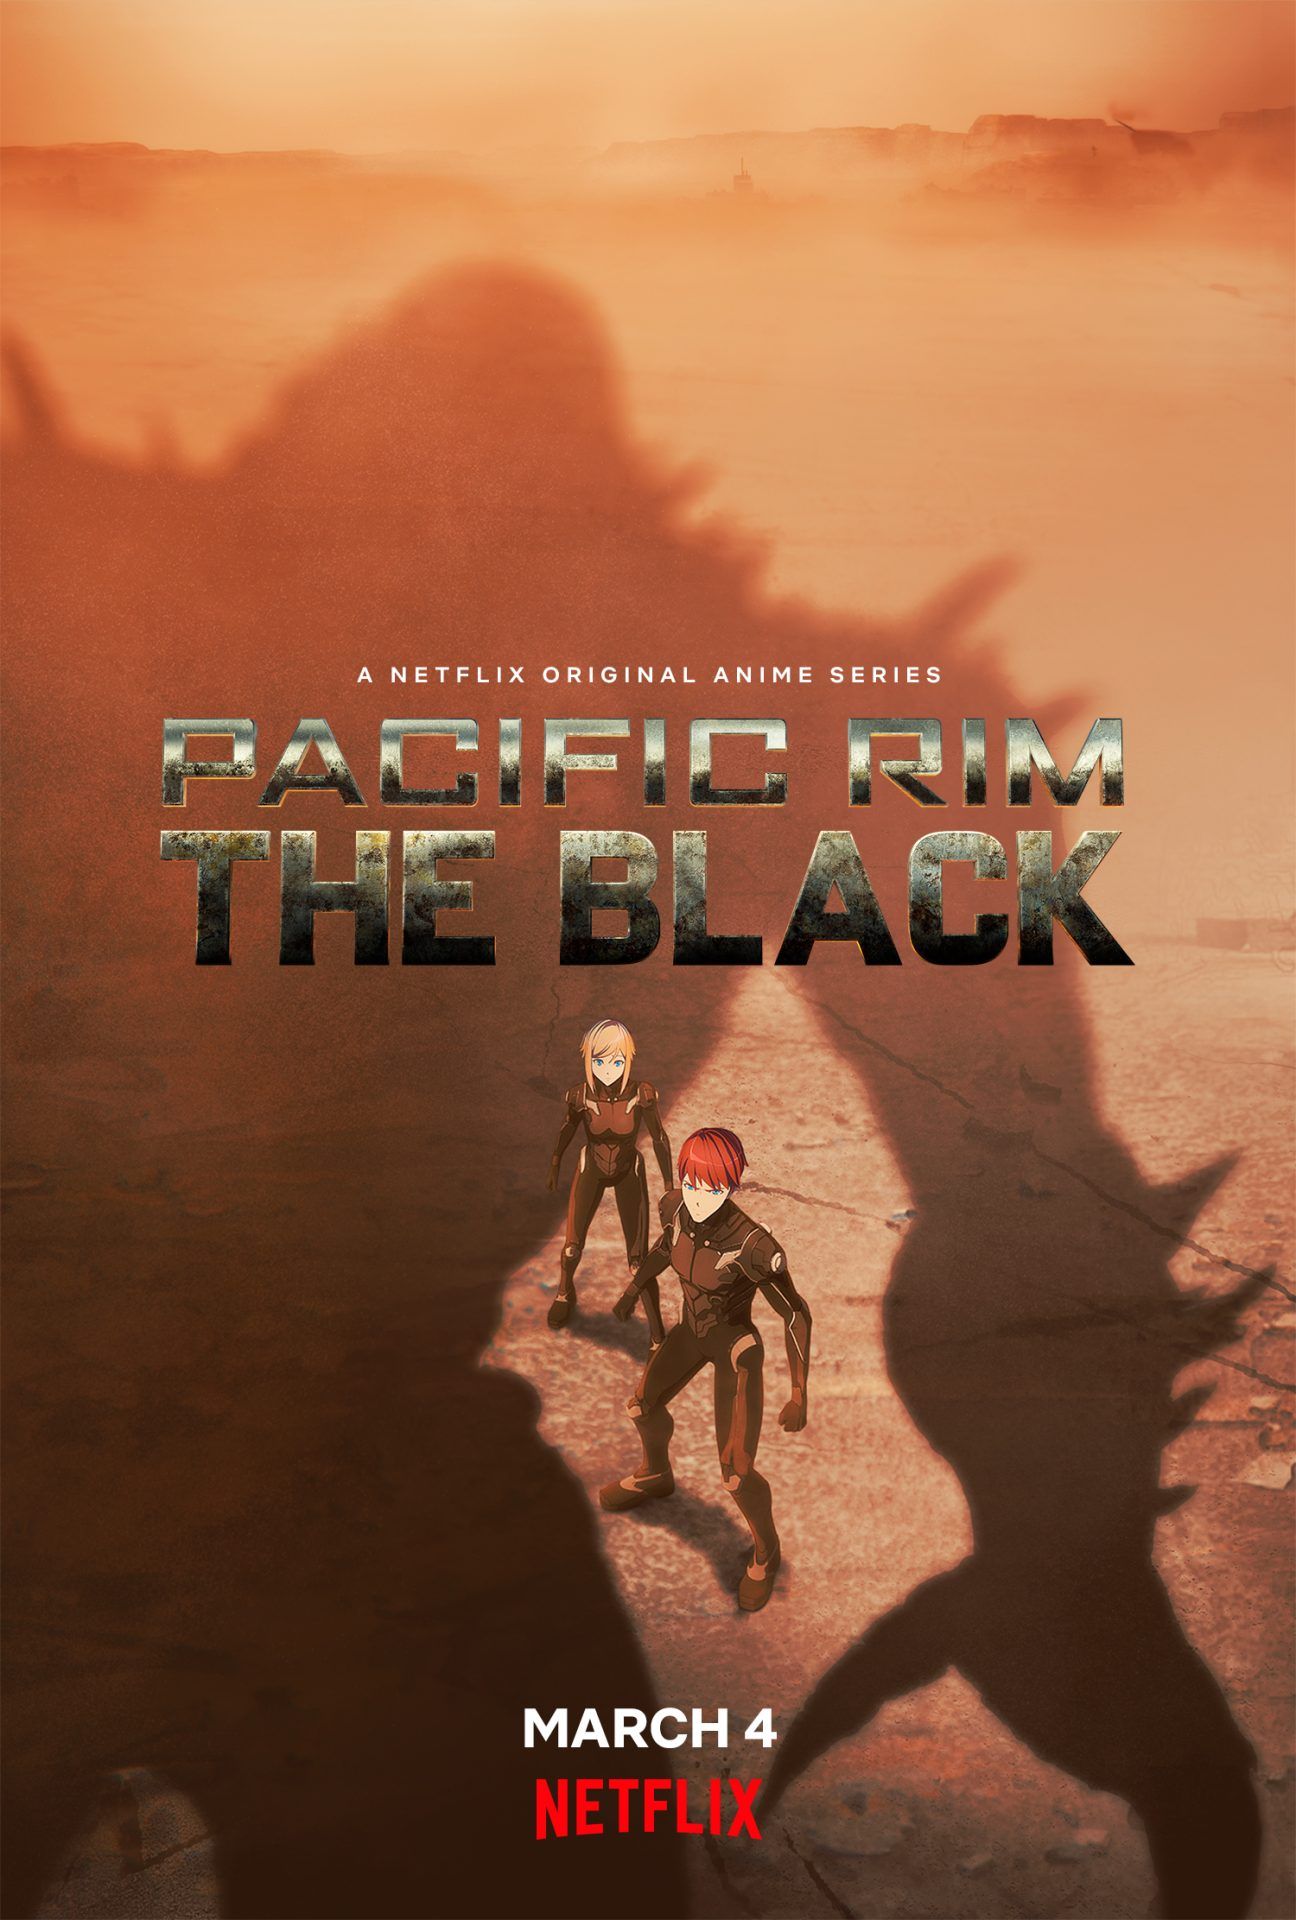 1st Trailer For Netflix Original Series 'Pacific Rim: The Black'